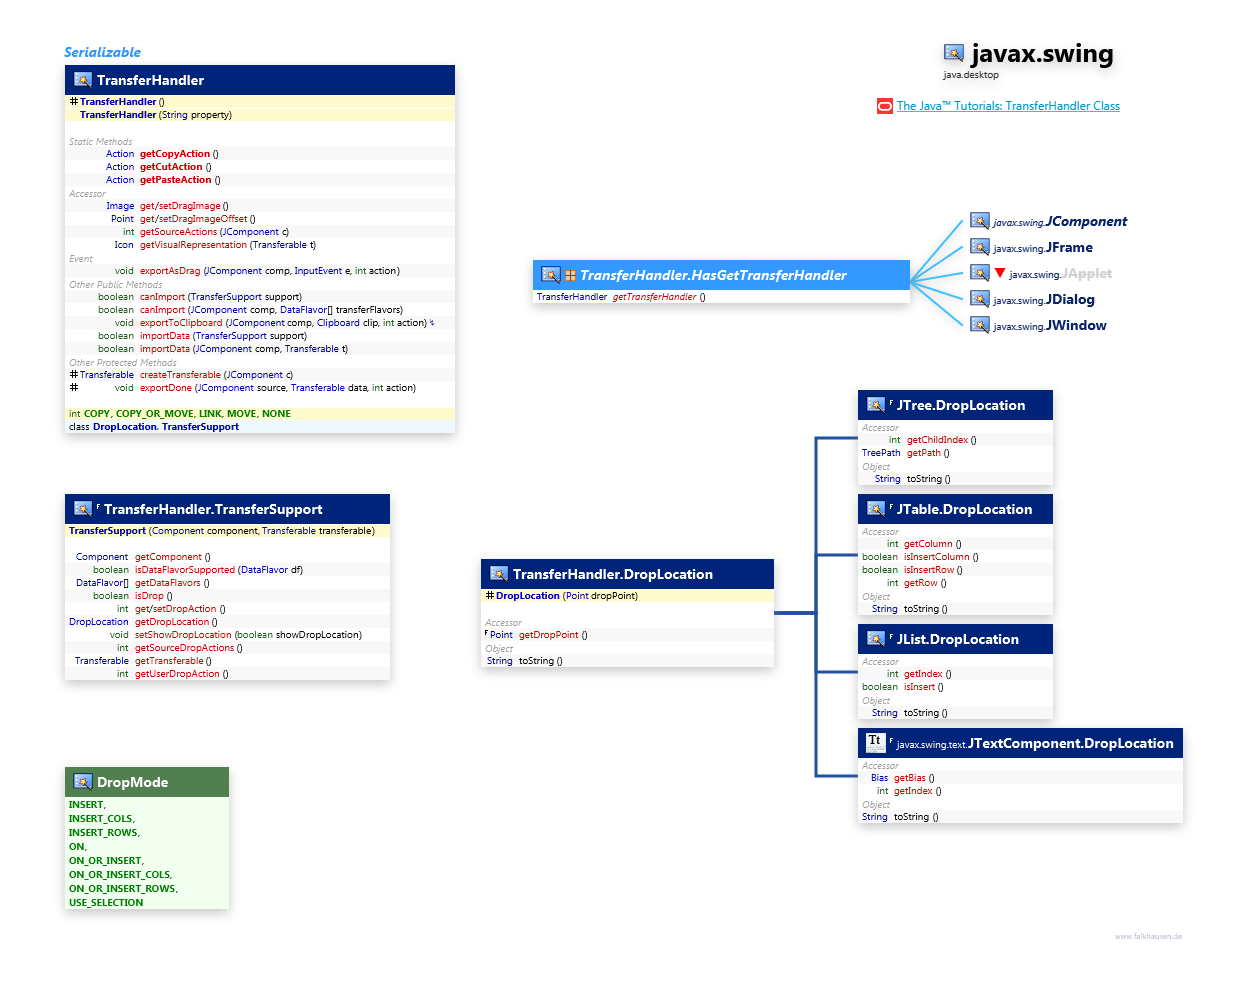 javax.swing TransferHandler class diagram and api documentation for Java 10